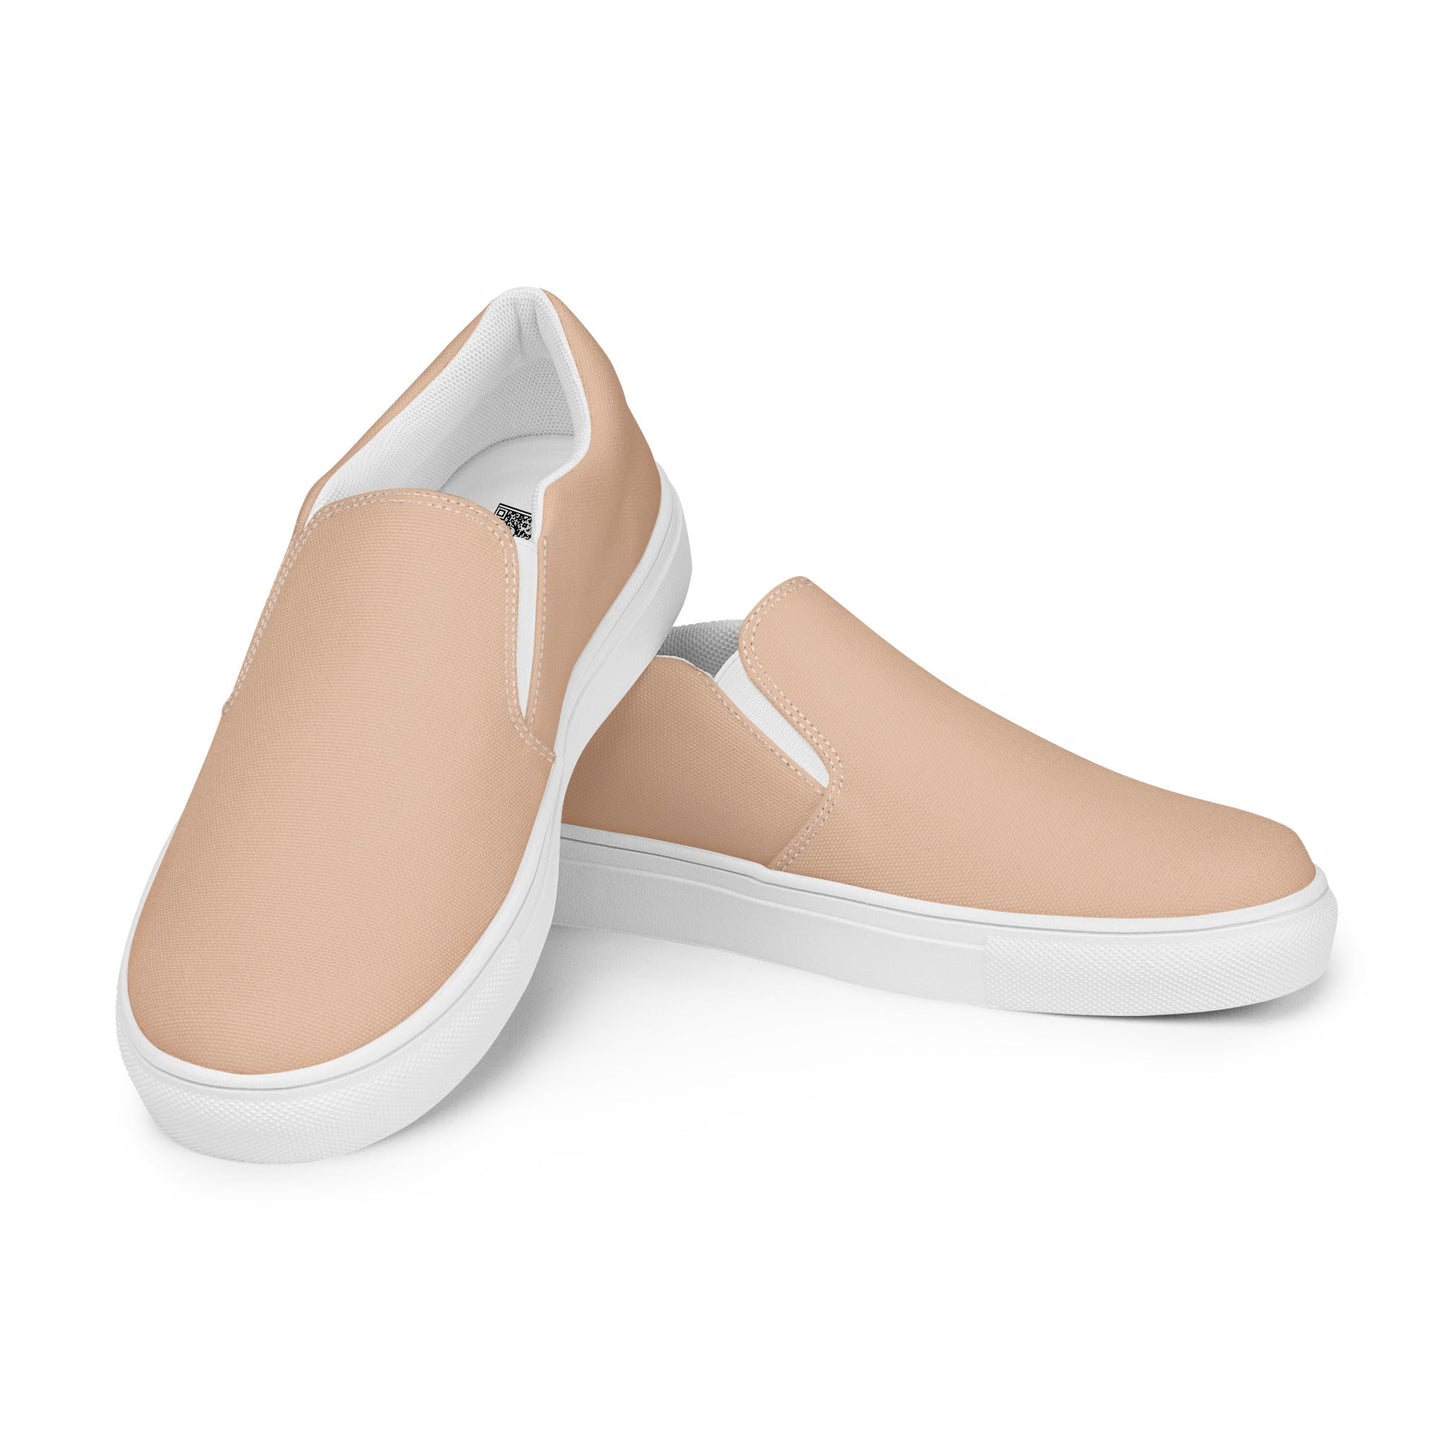 klasneakers Men’s slip-on canvas shoes - Orange Cream